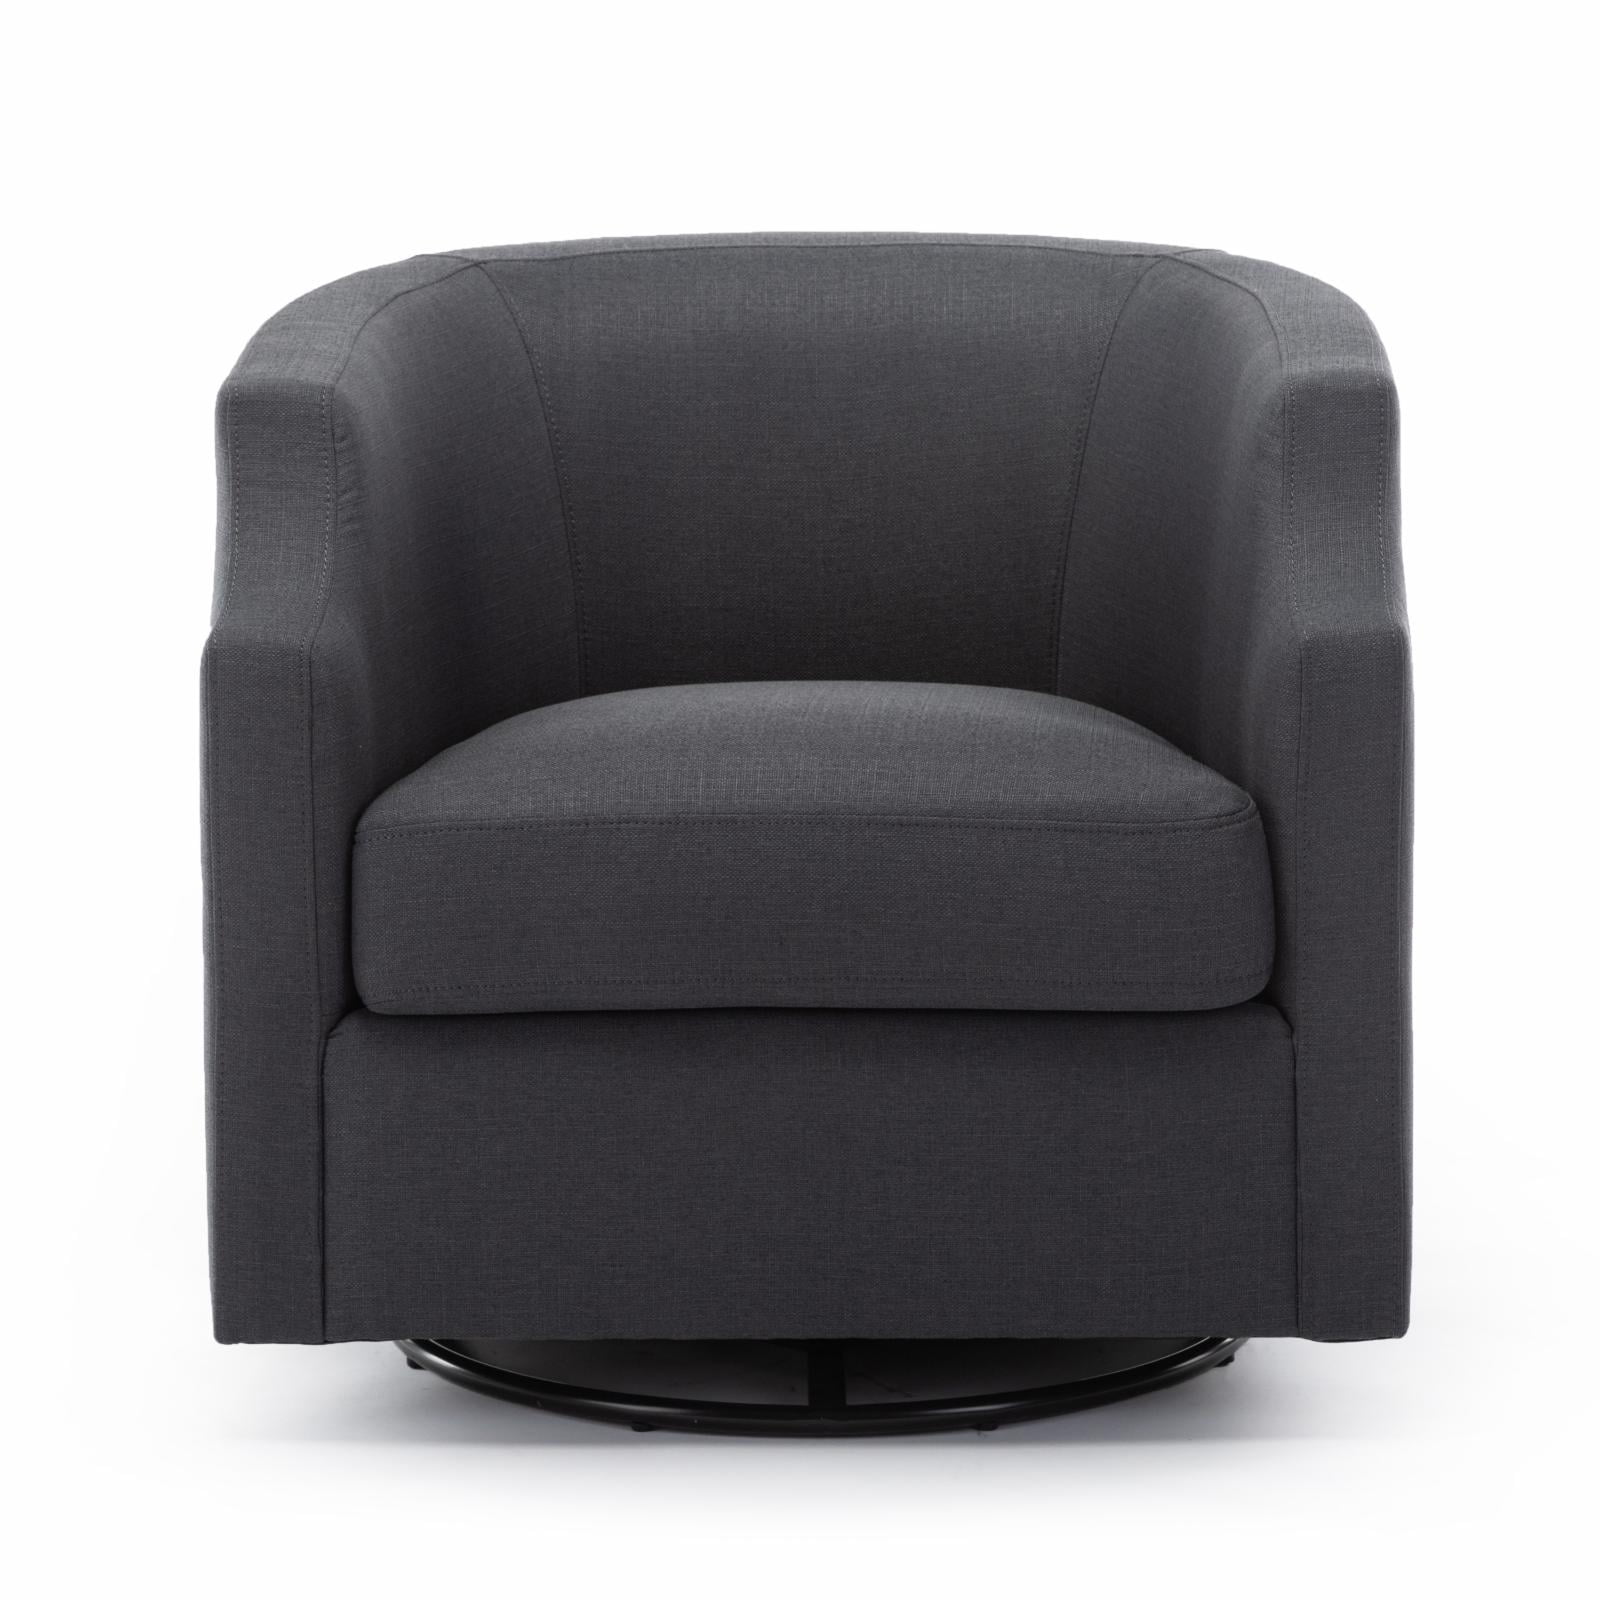 Comfort Pointe Infinity Swivel Glider Barrel Chair - Walmart.com